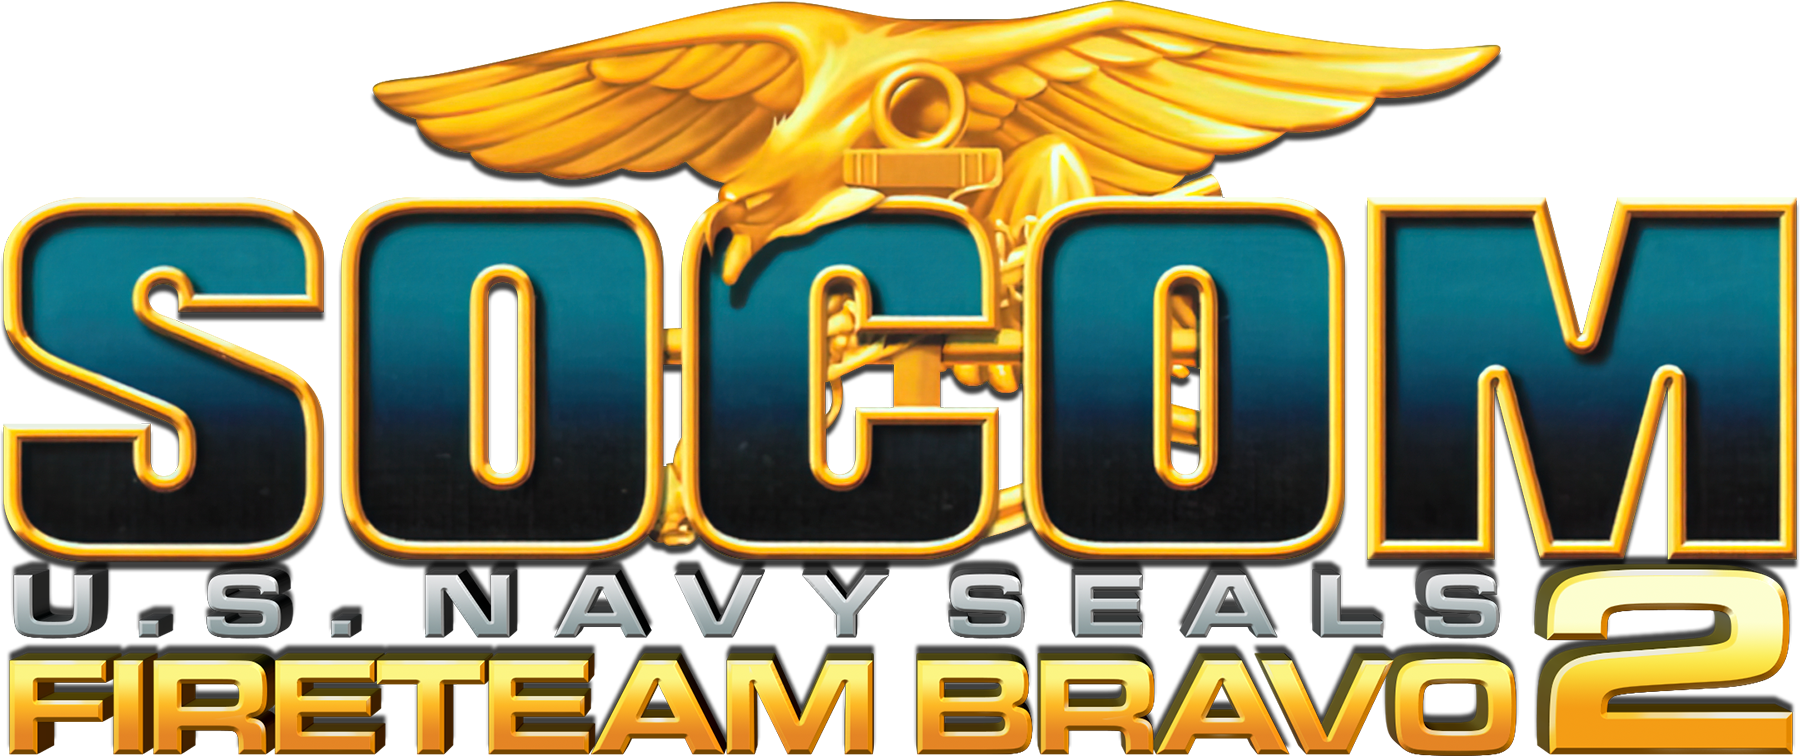 SOCOM: U.S. Navy SEALs - Fireteam Bravo 2 official promotional image -  MobyGames